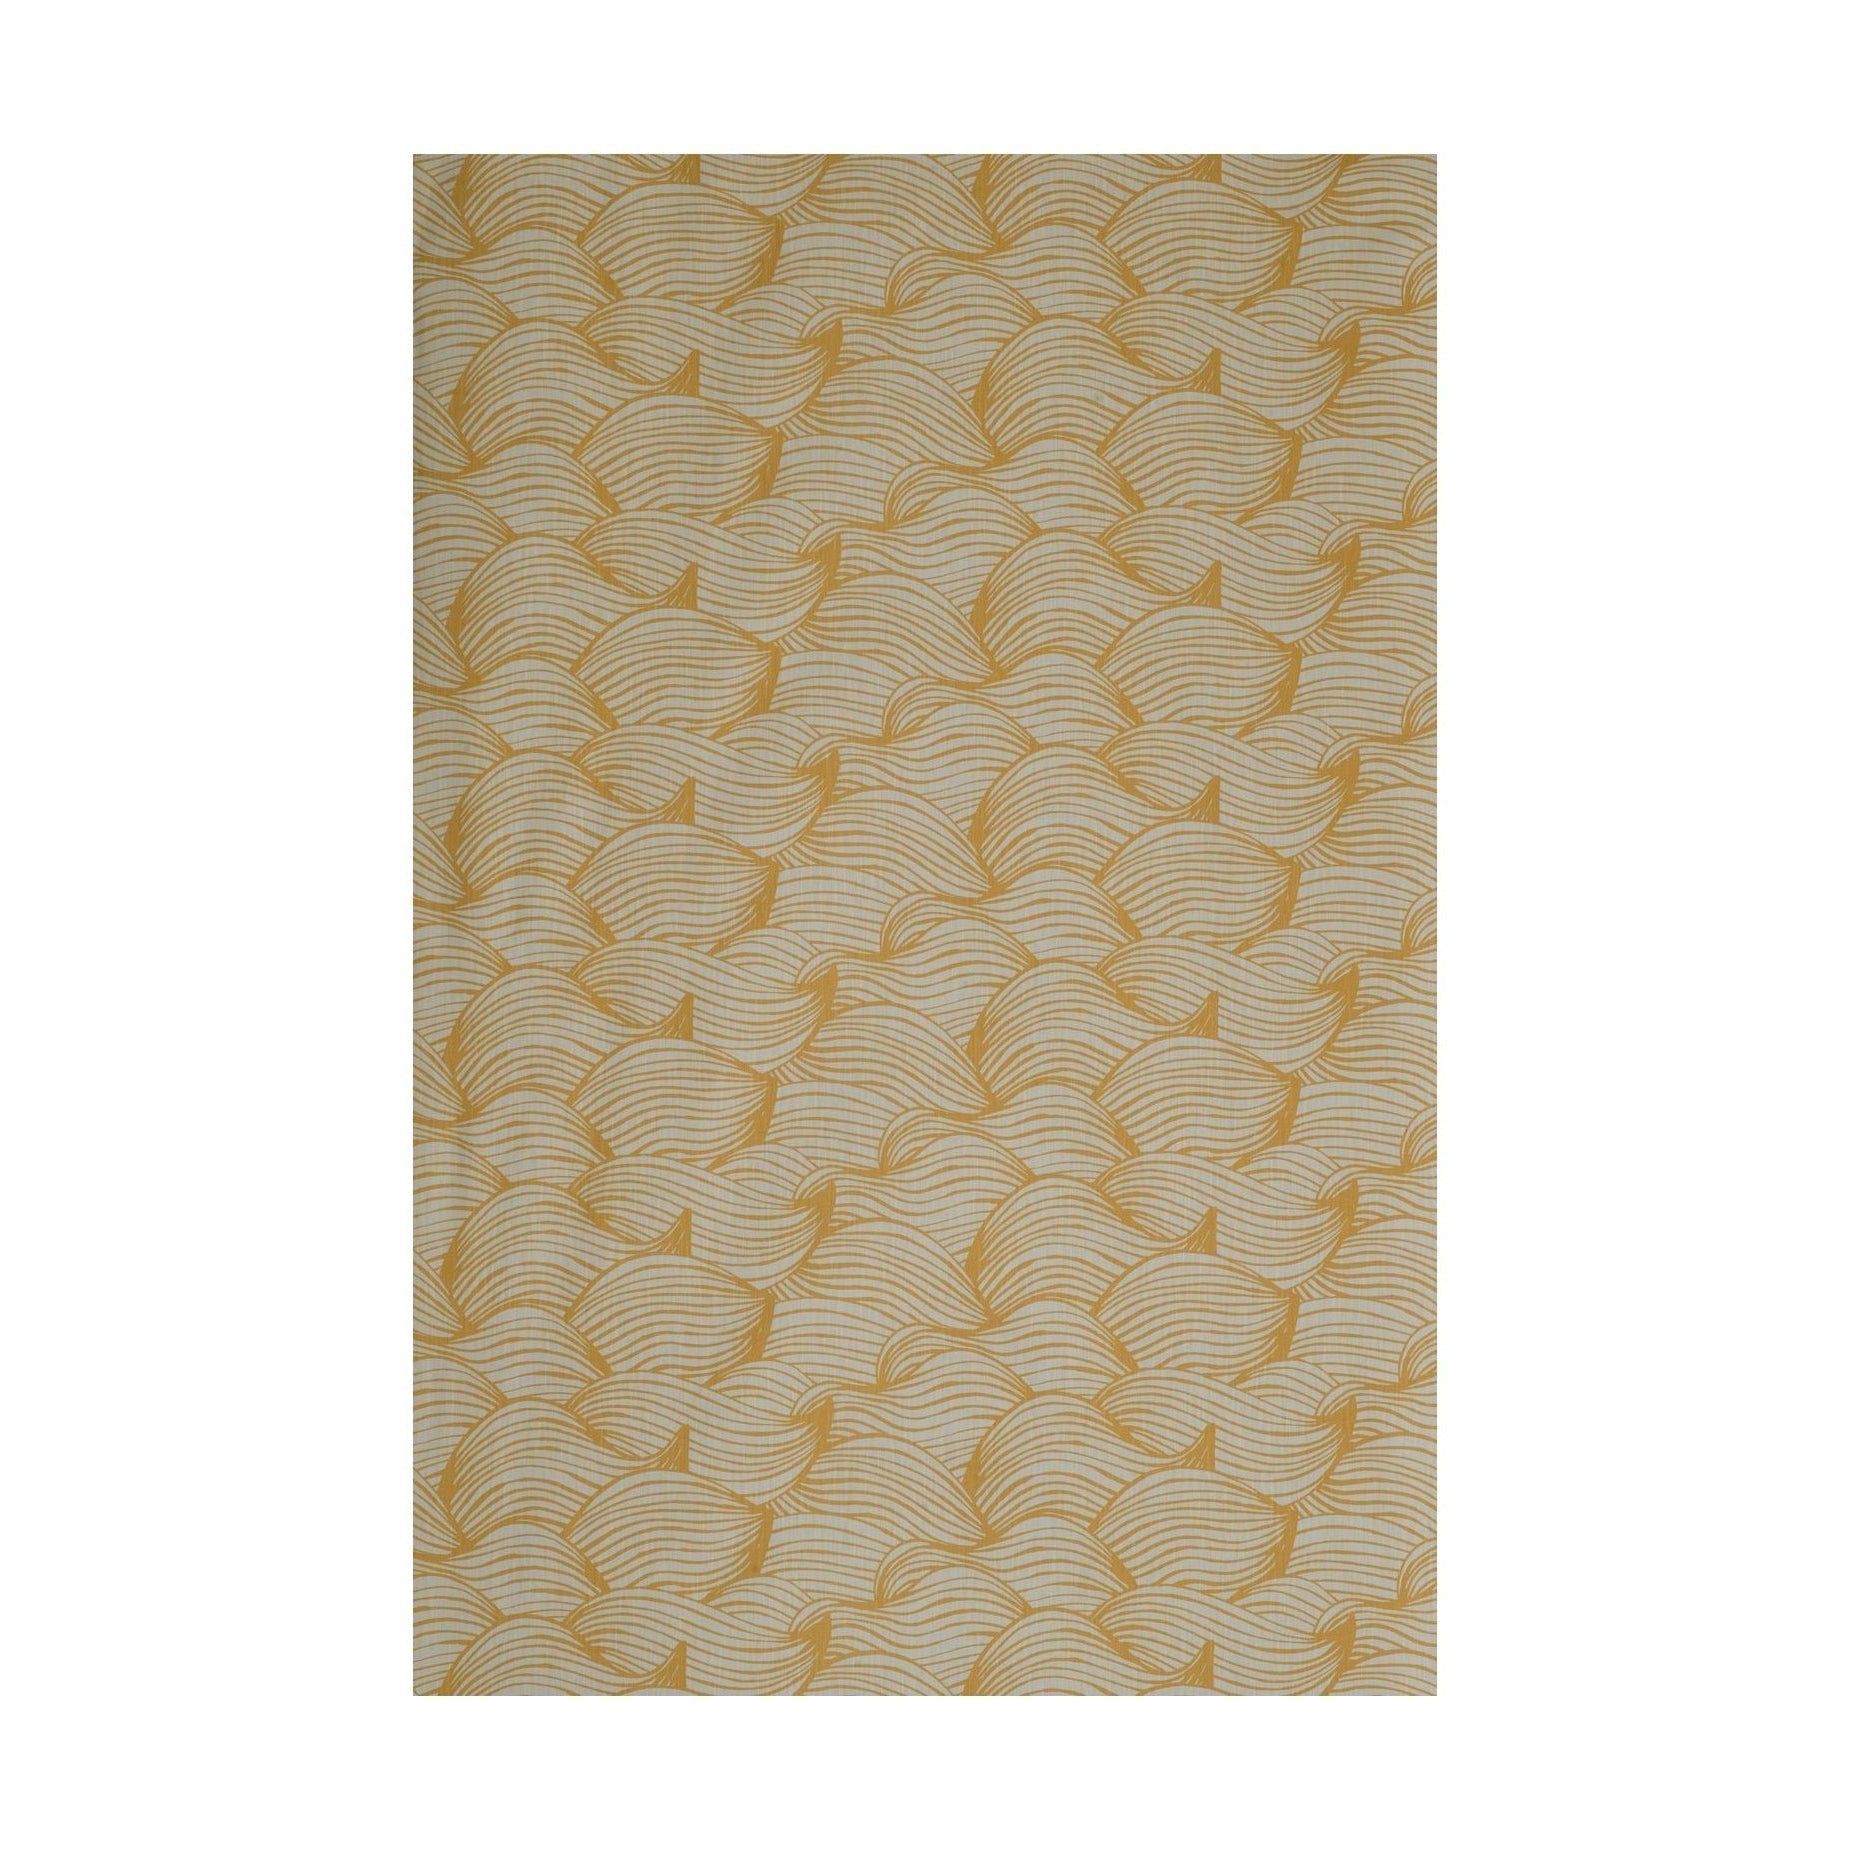 Spira Wave Fabric Width 150 Cm (Price Per Meter), Honey